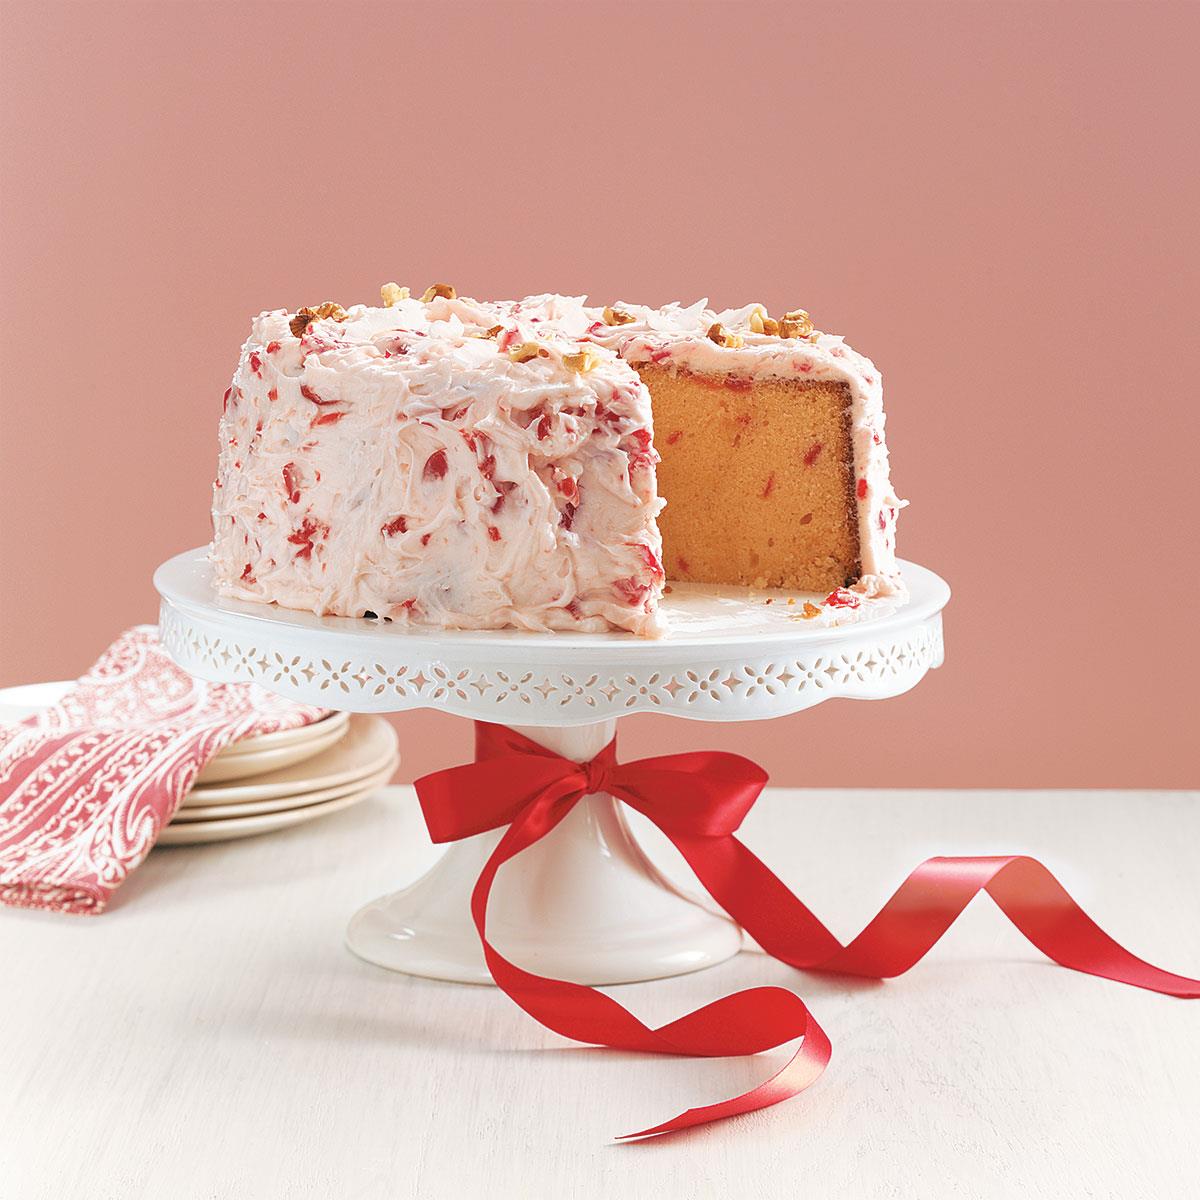 3 layer choclate cake | Cake, Desserts, Pound cake